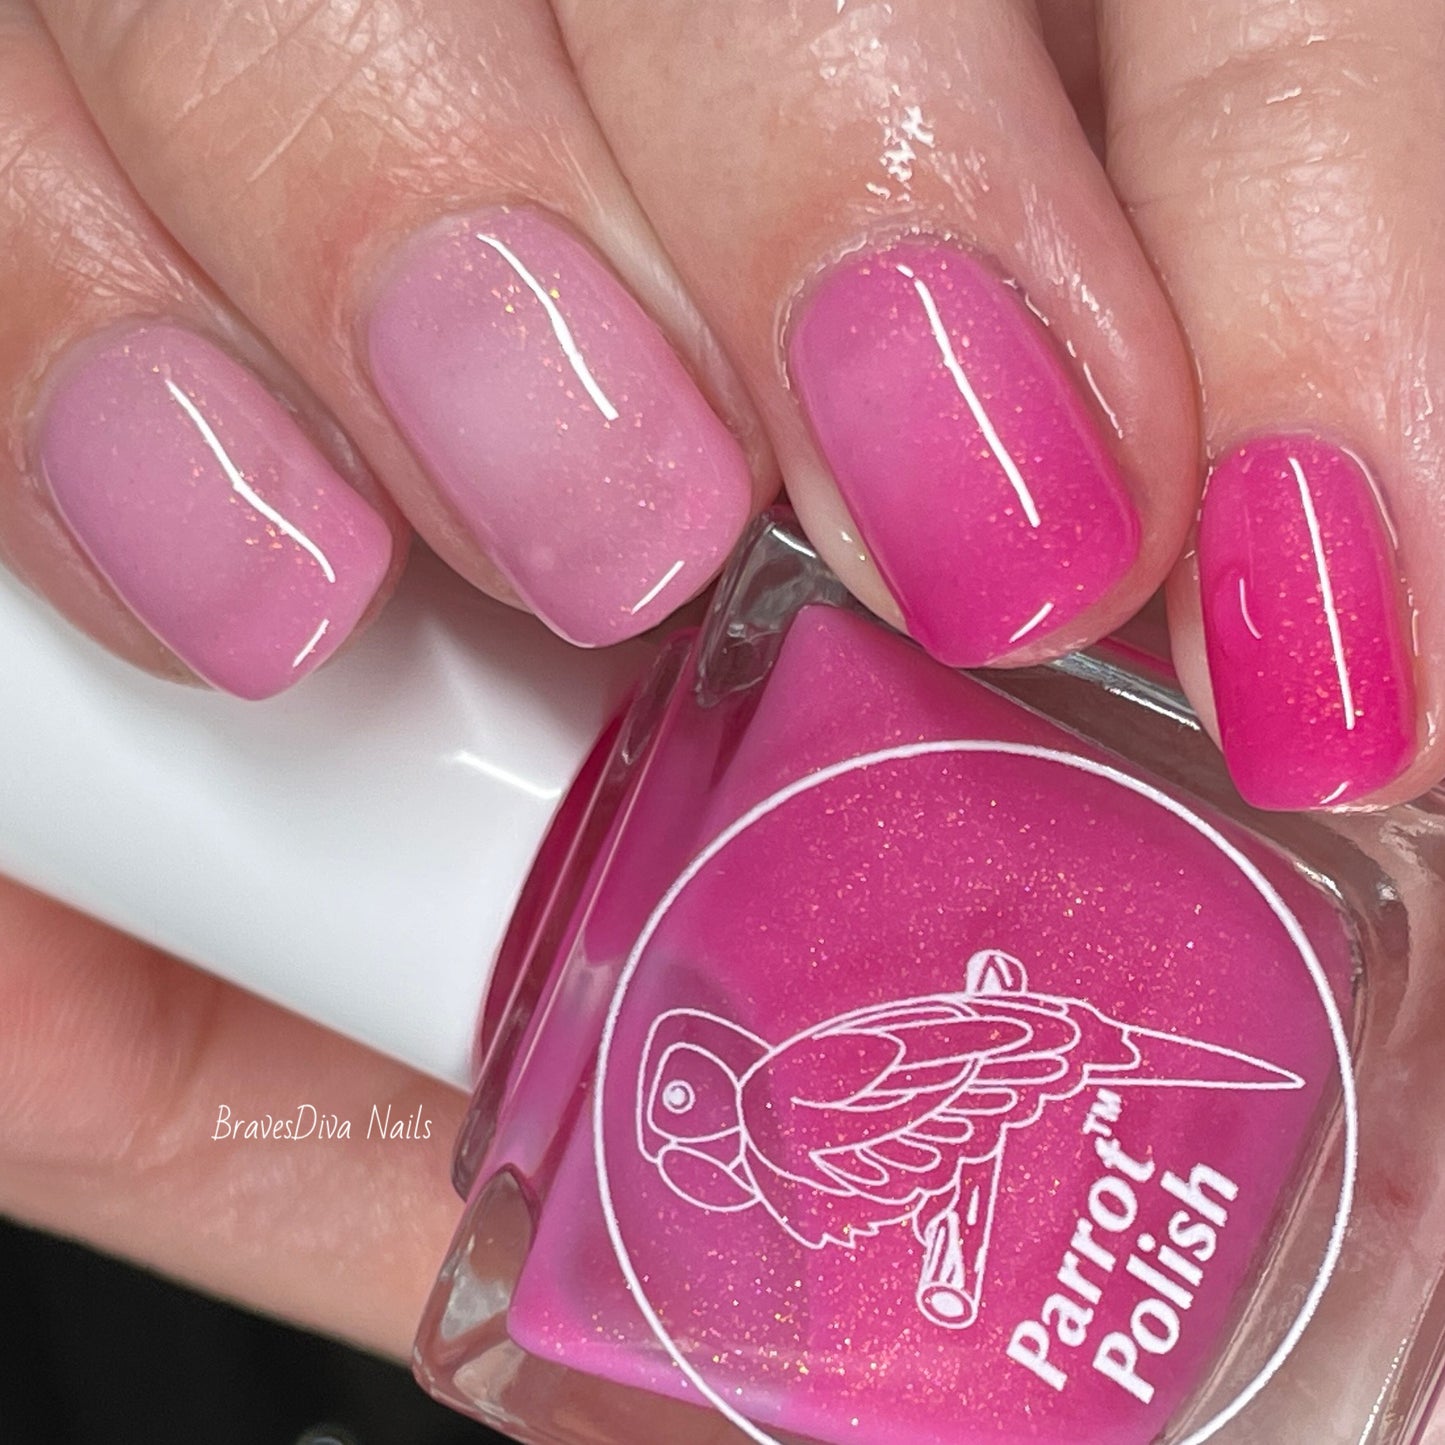 Parrot Polish Penelope's Desires Thermal Nail Polish - Pink/Clear